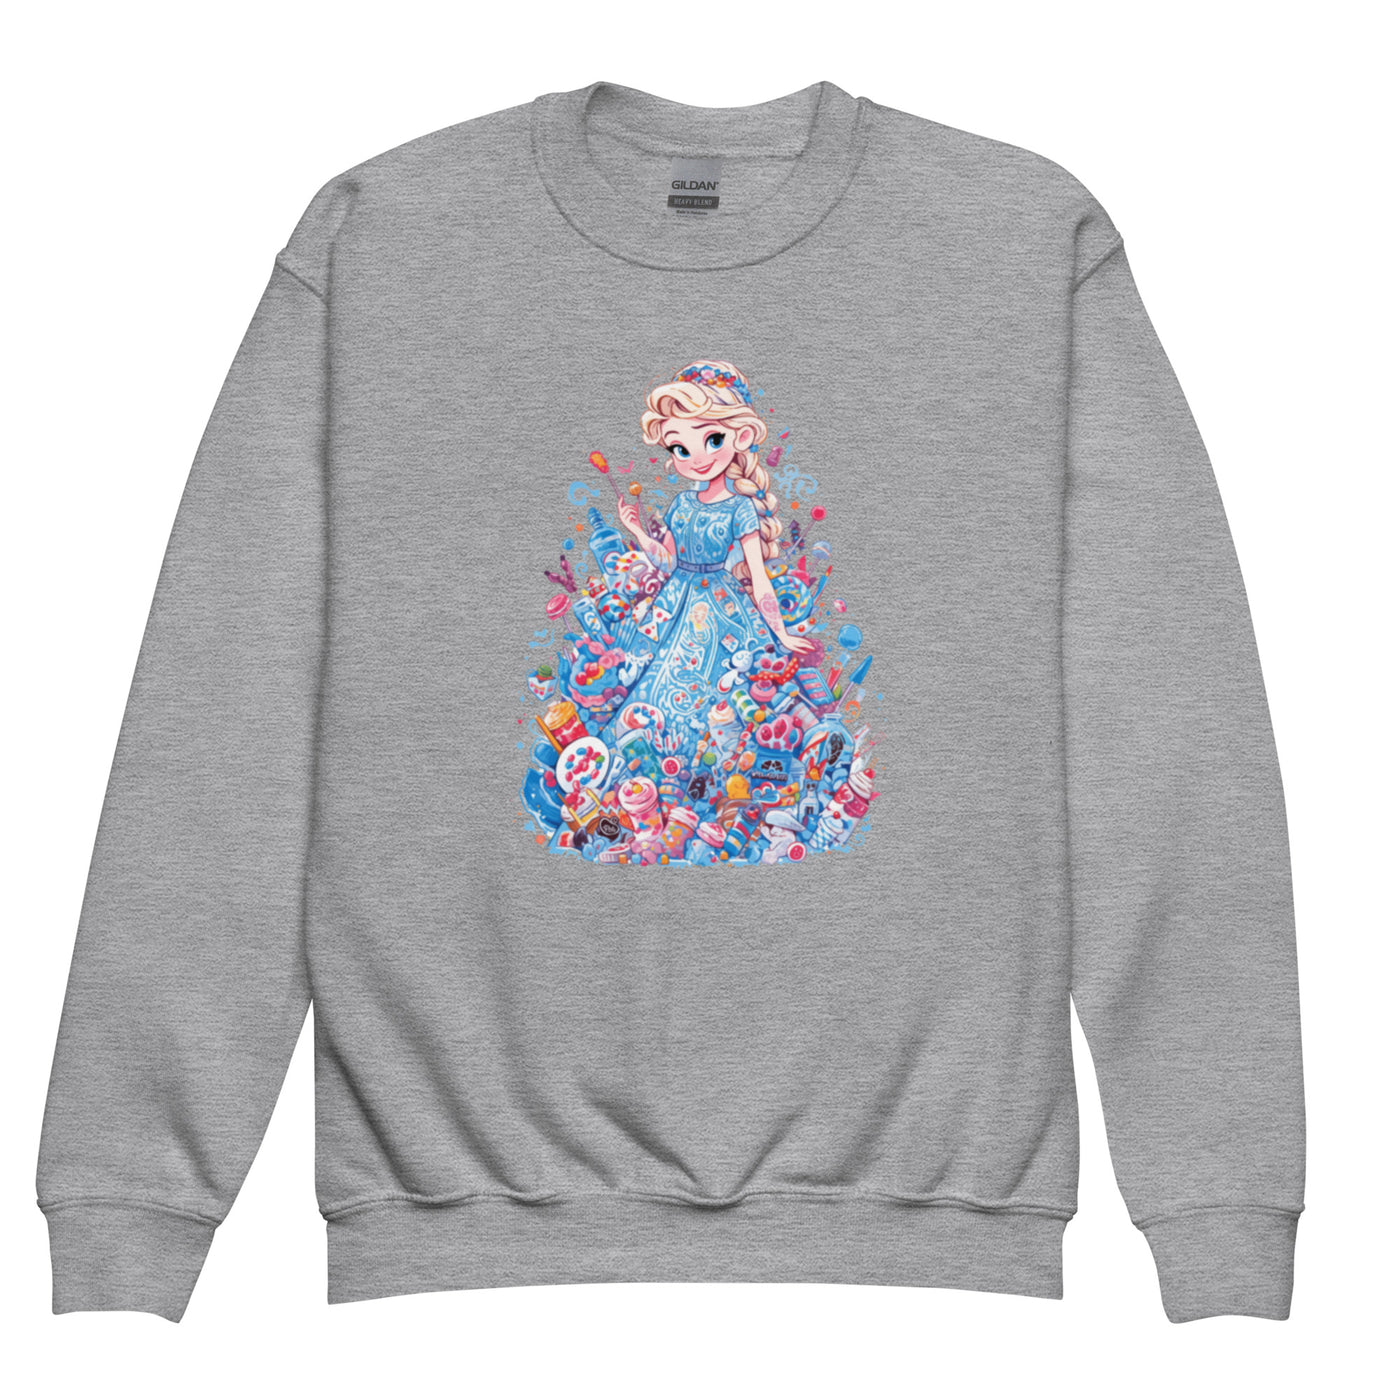 Frozen Elsa Youth crewneck sweatshirt XS-XL Unisex - Coco Potato - dresses and partywear for little girls